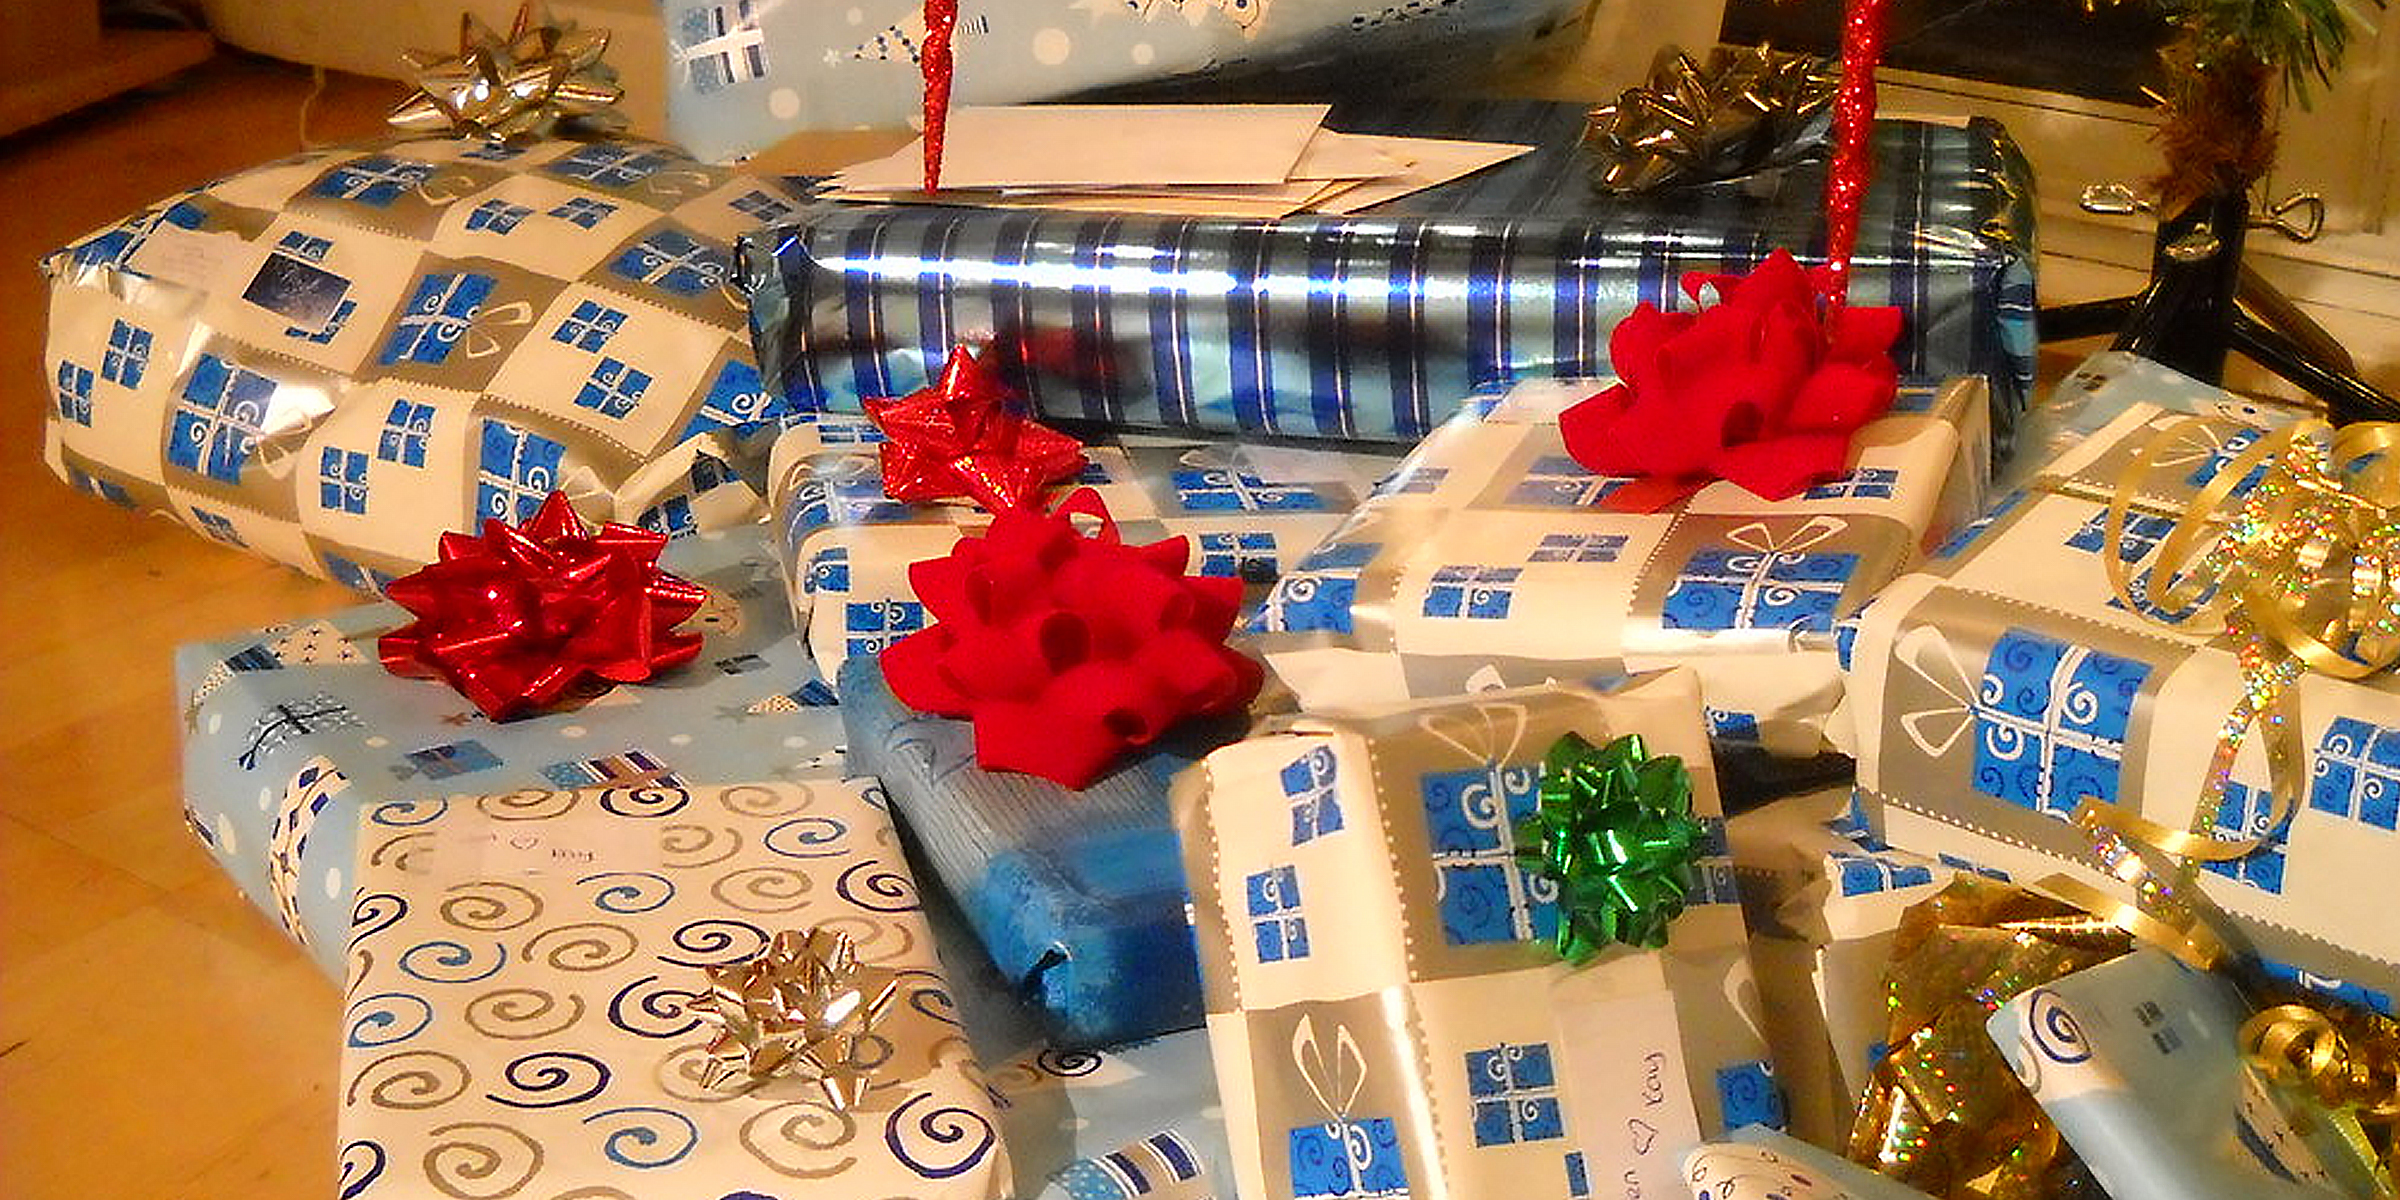 Neatly wrapped Christmas presents | Source: flickr.com/www.metaphoricalplatypus.com/CC BY 2.0